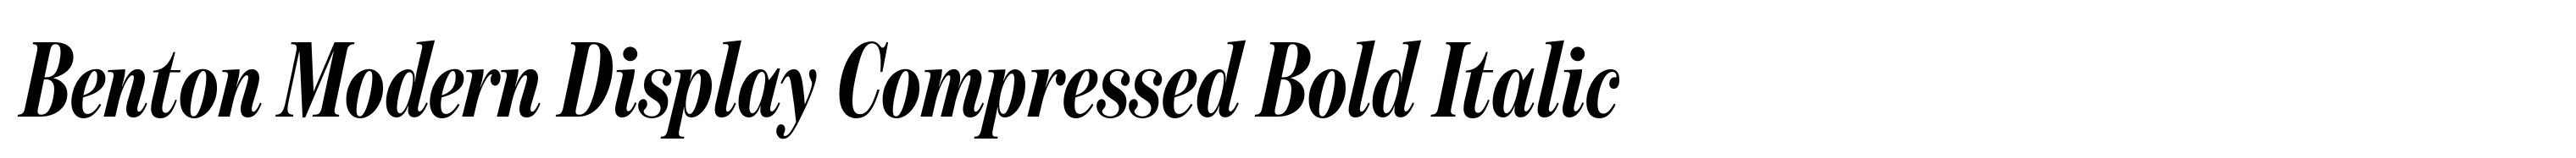 Benton Modern Display Compressed Bold Italic